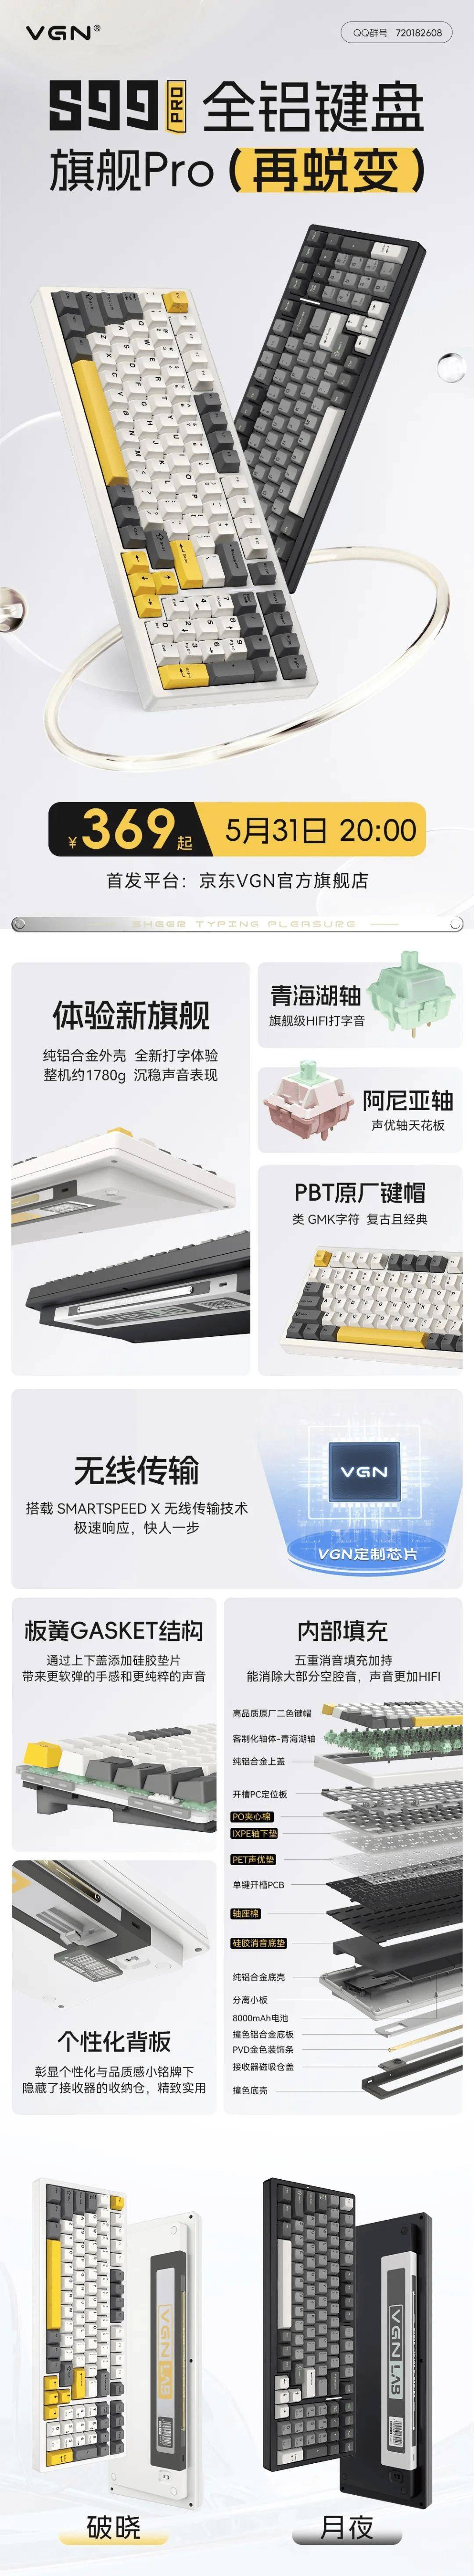 VGN S99PRO全铝客制化机械键盘发布 内置8000mAh电池